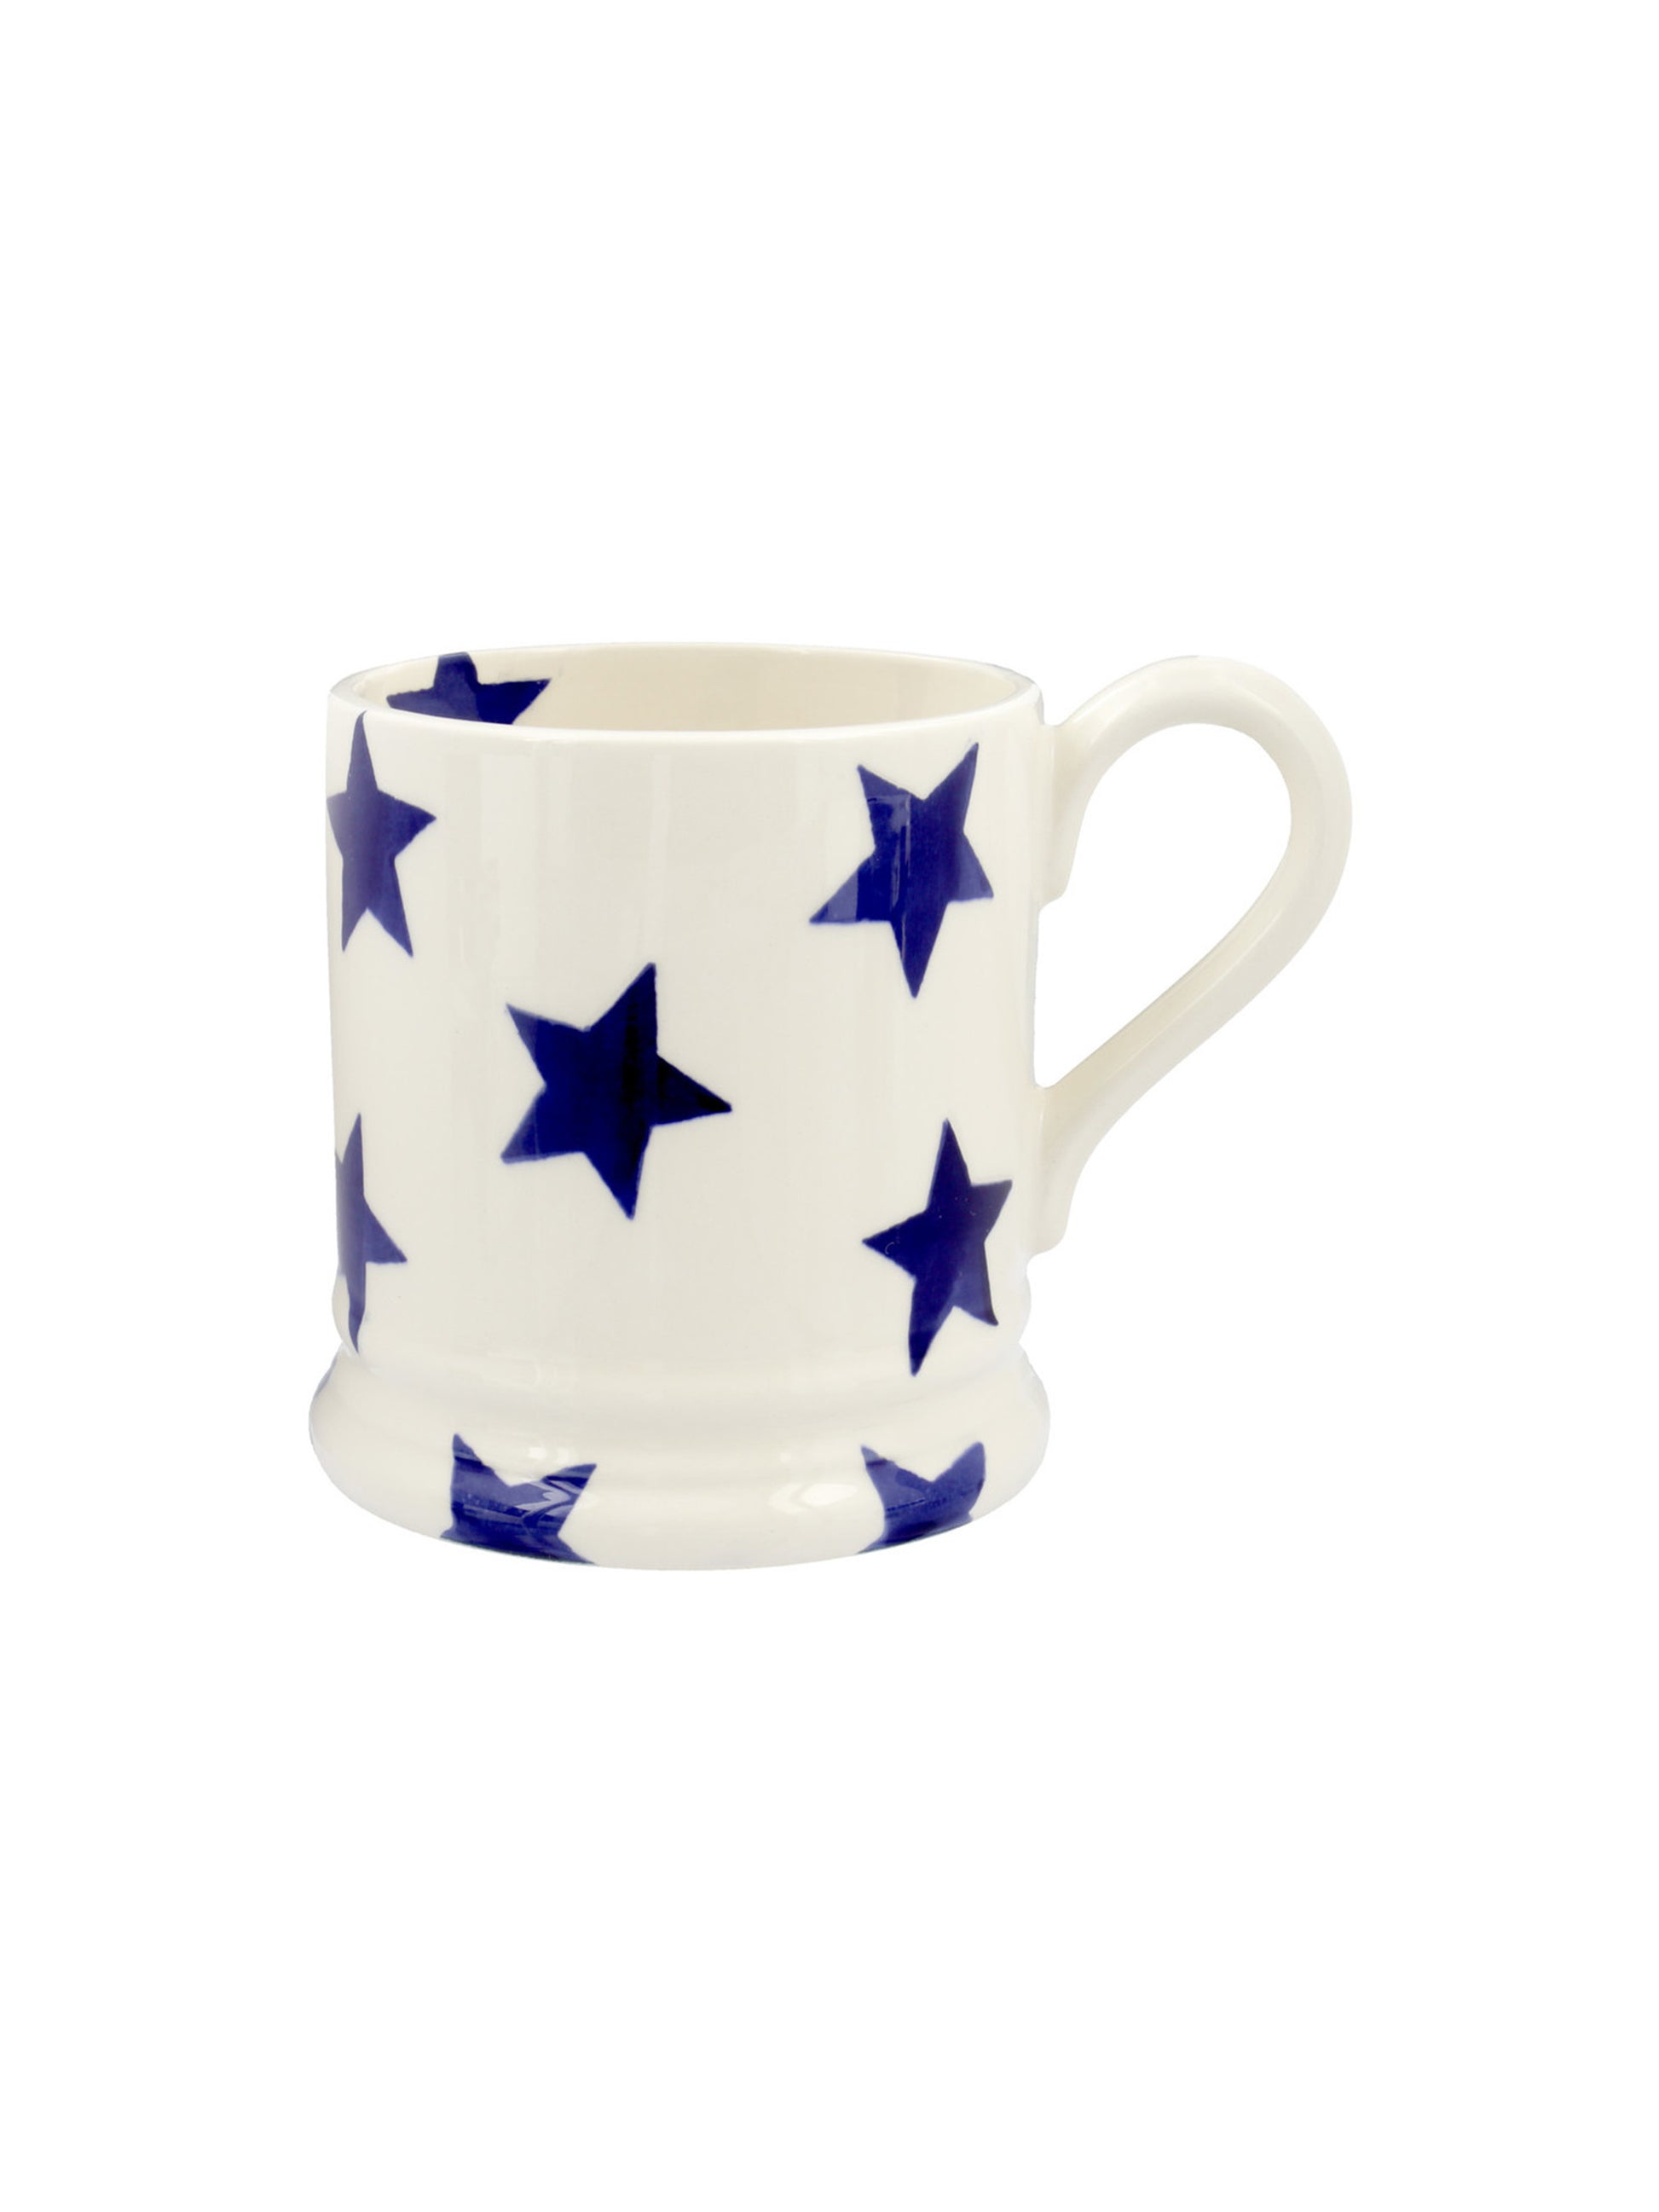 Emma Bridgewater Blue Star 1/2 Pint Mug Weston Table